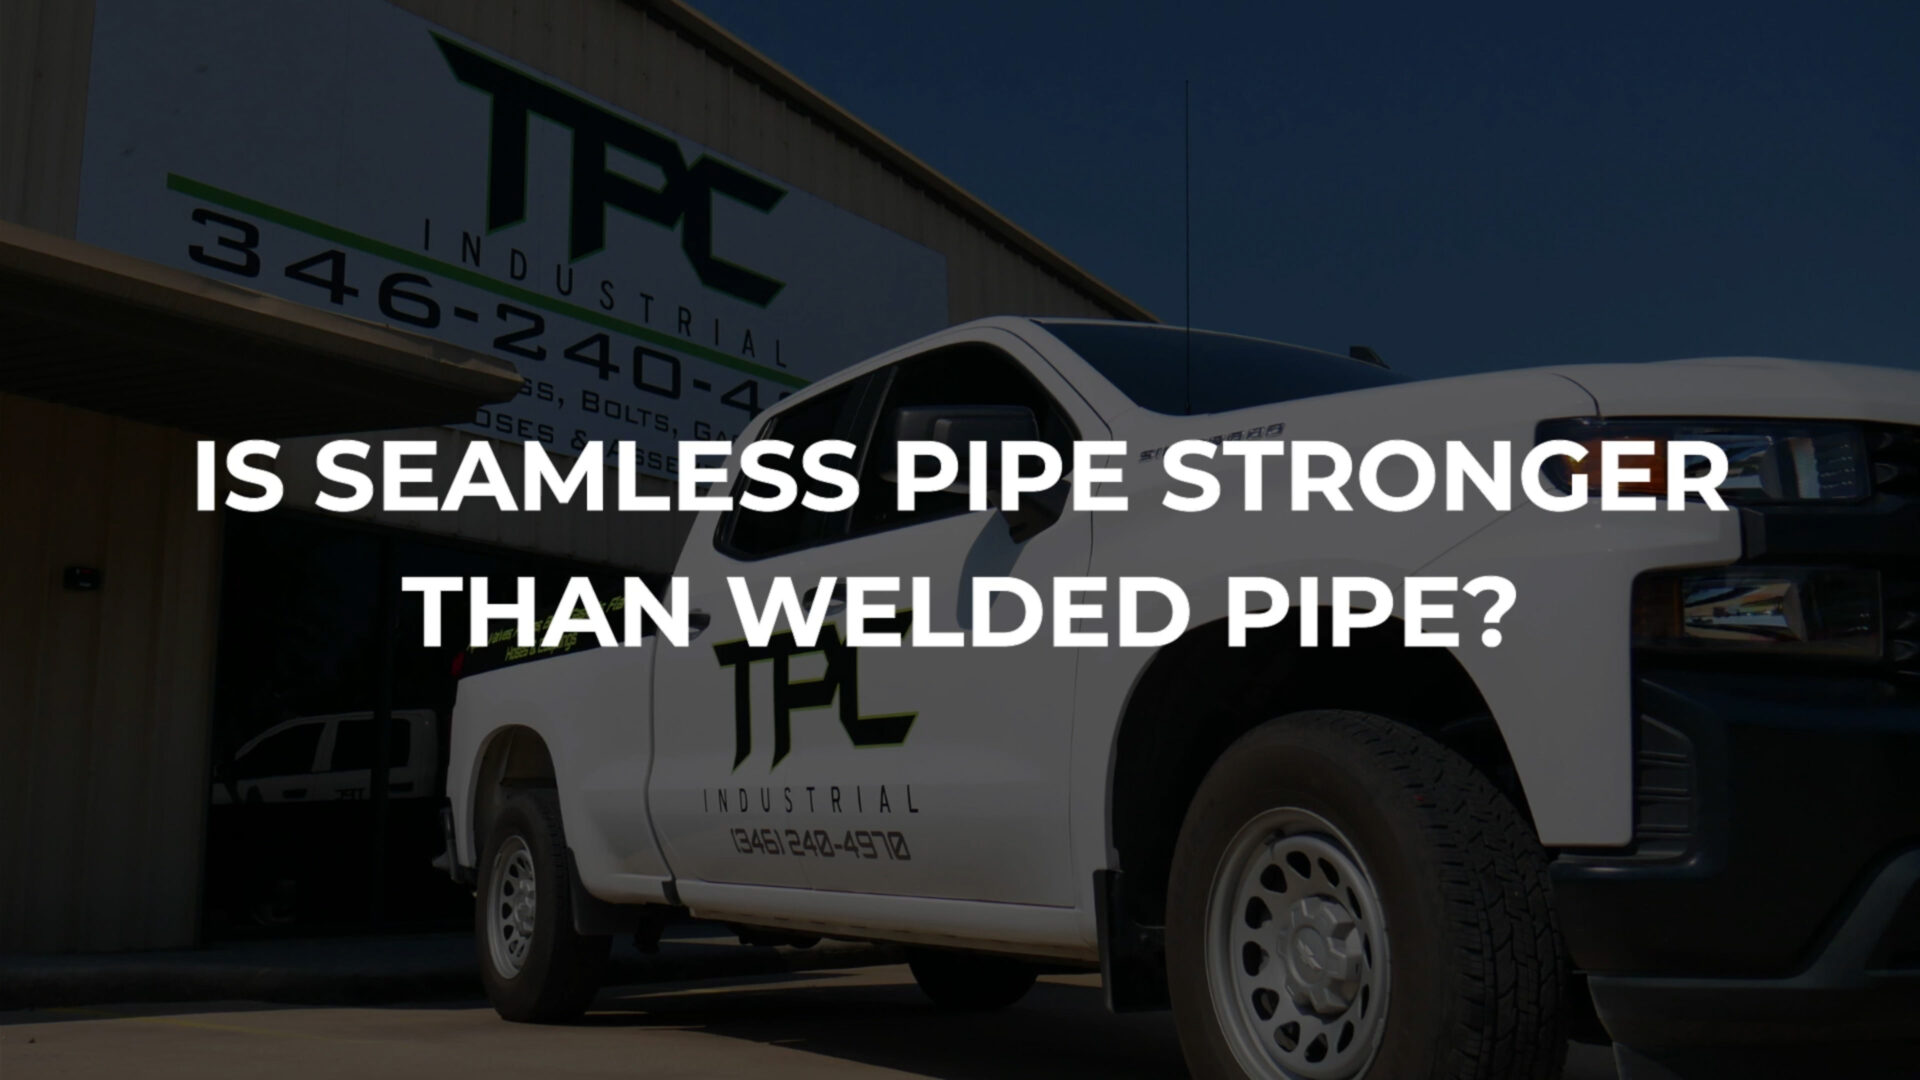 Seamless pipe